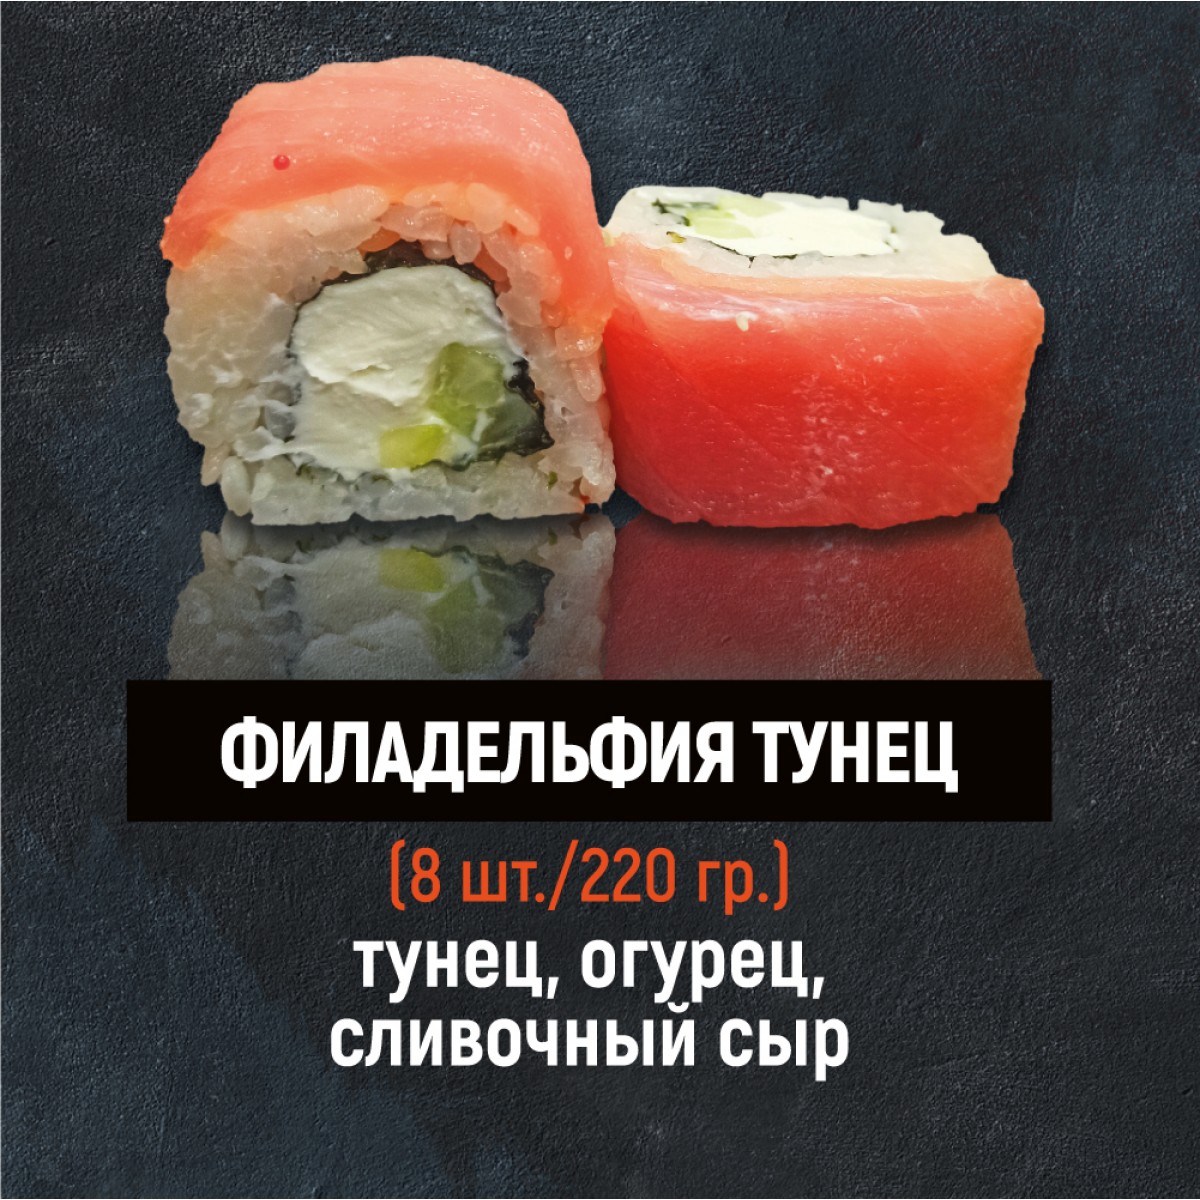 Заказать суши в сургуте джонни тунец фото 55